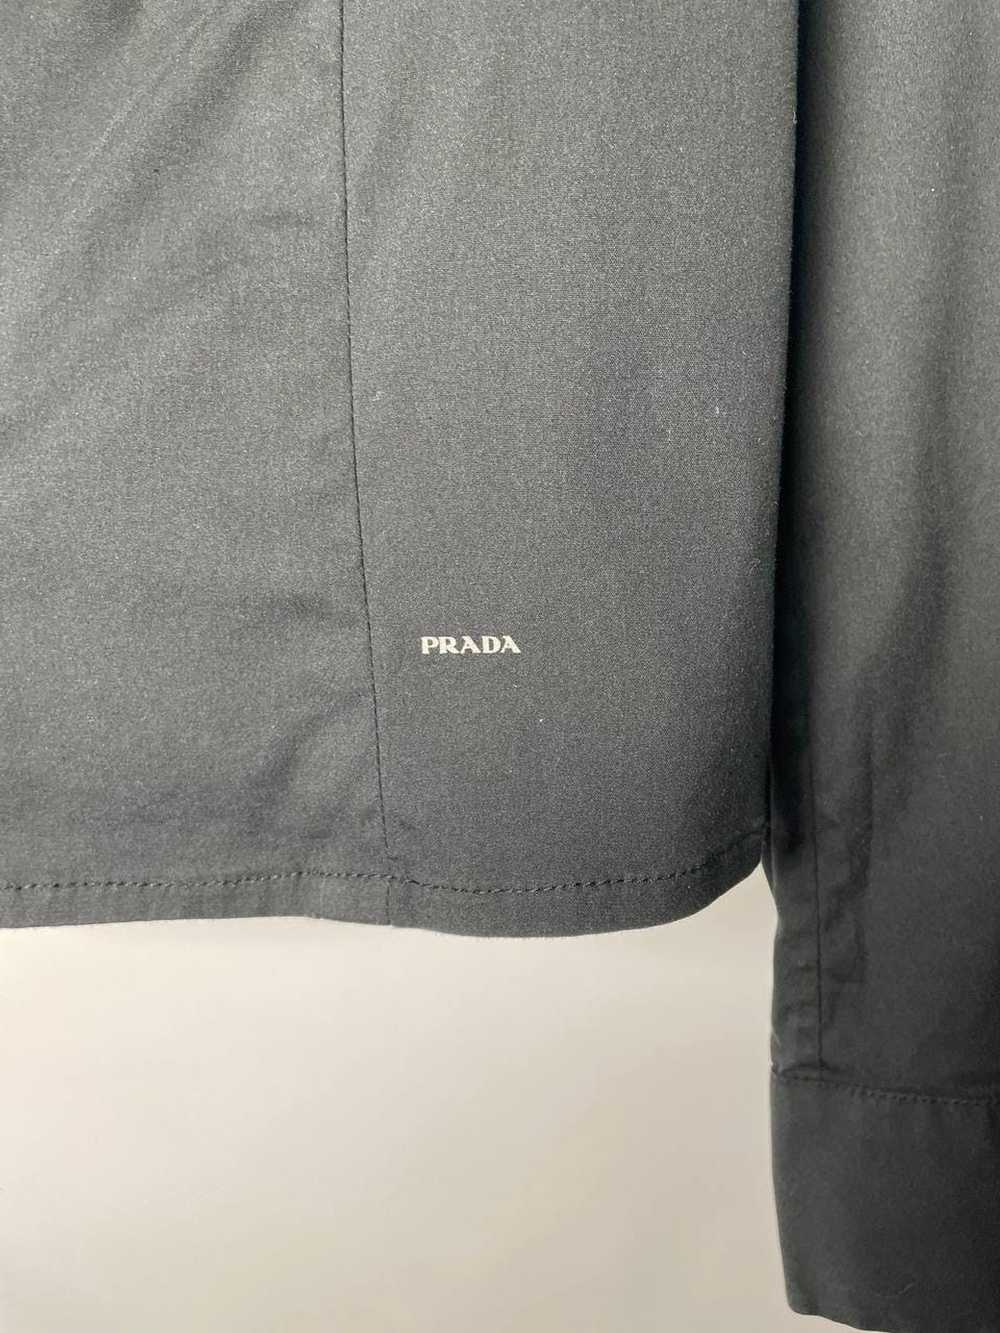 Italian Designers × Luxury × Prada Prada shirt - image 3